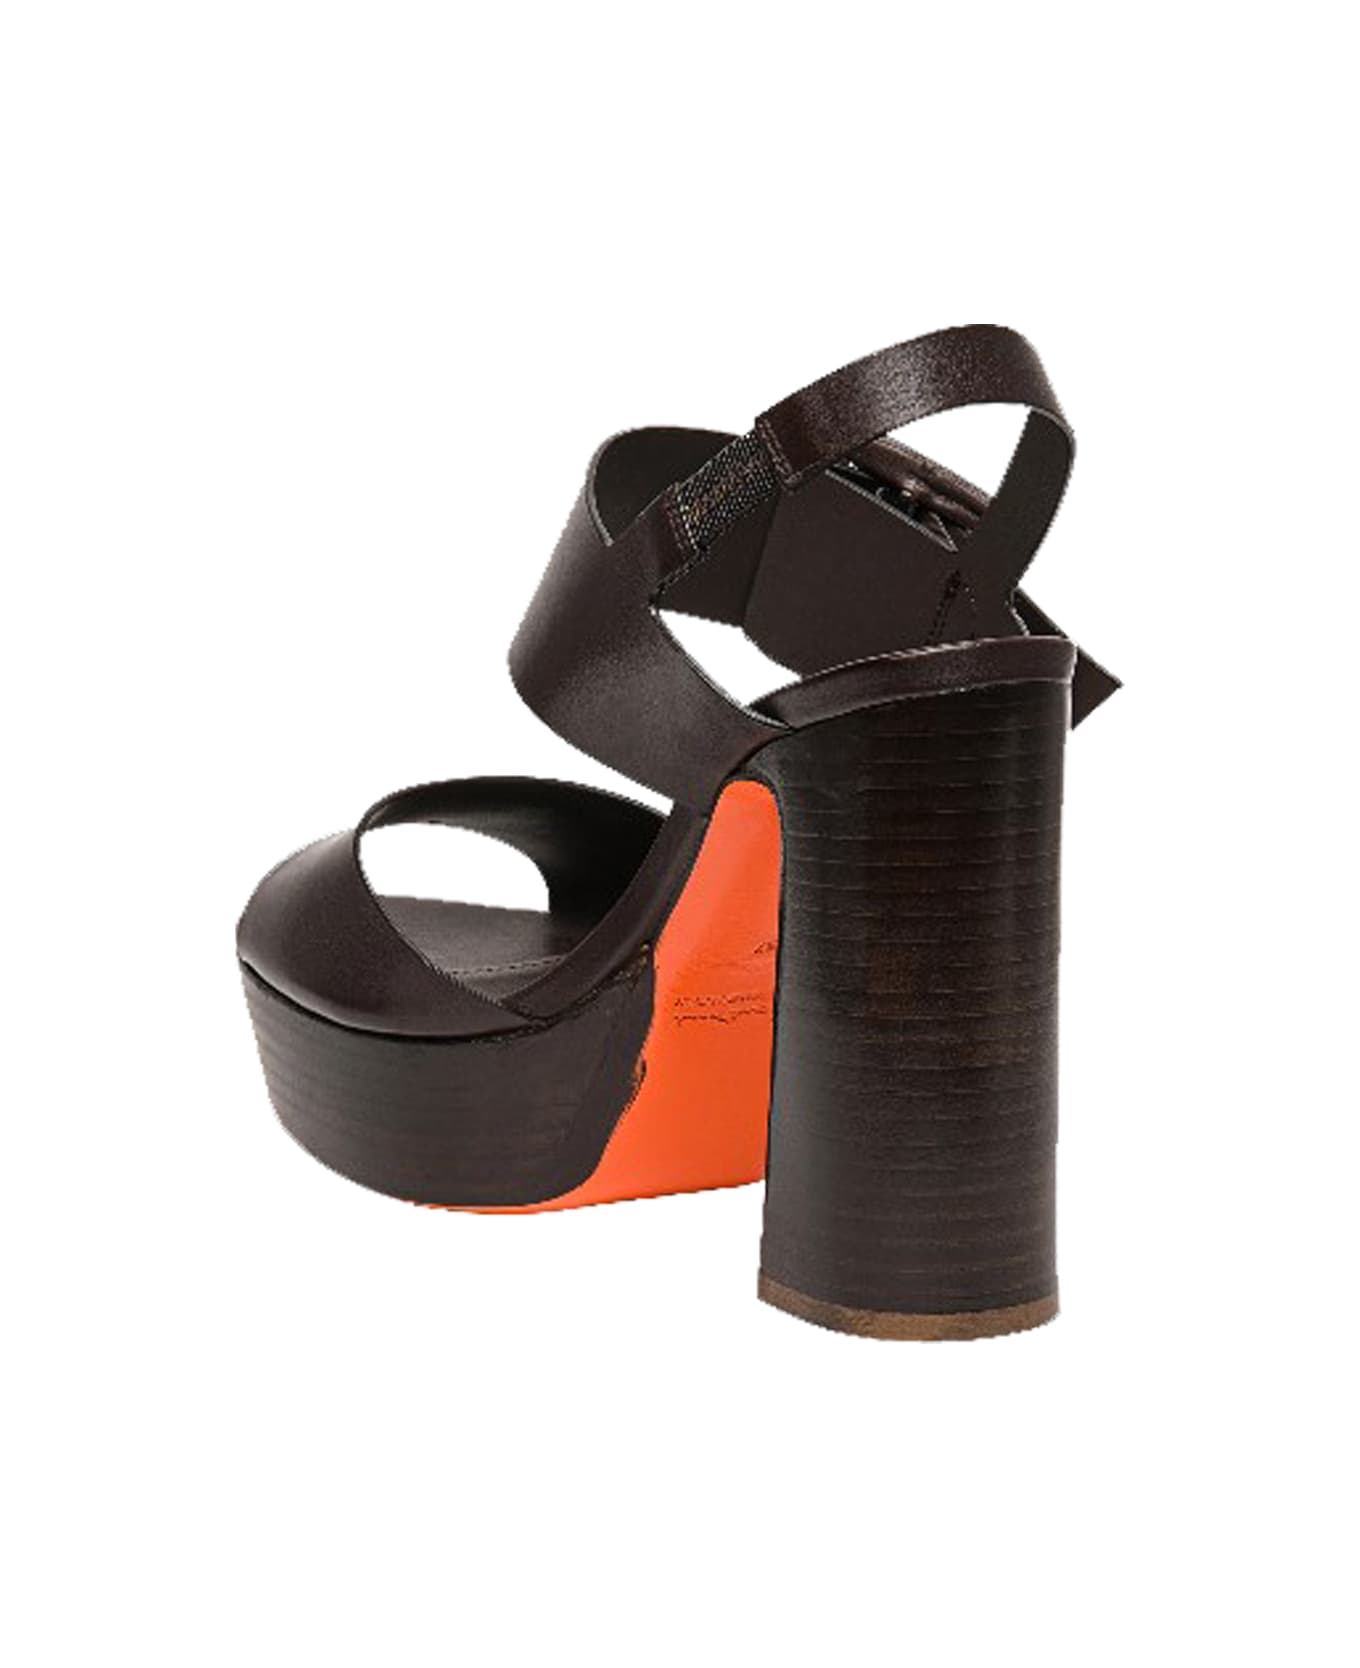 Santoni Shoes With Heels - Brown